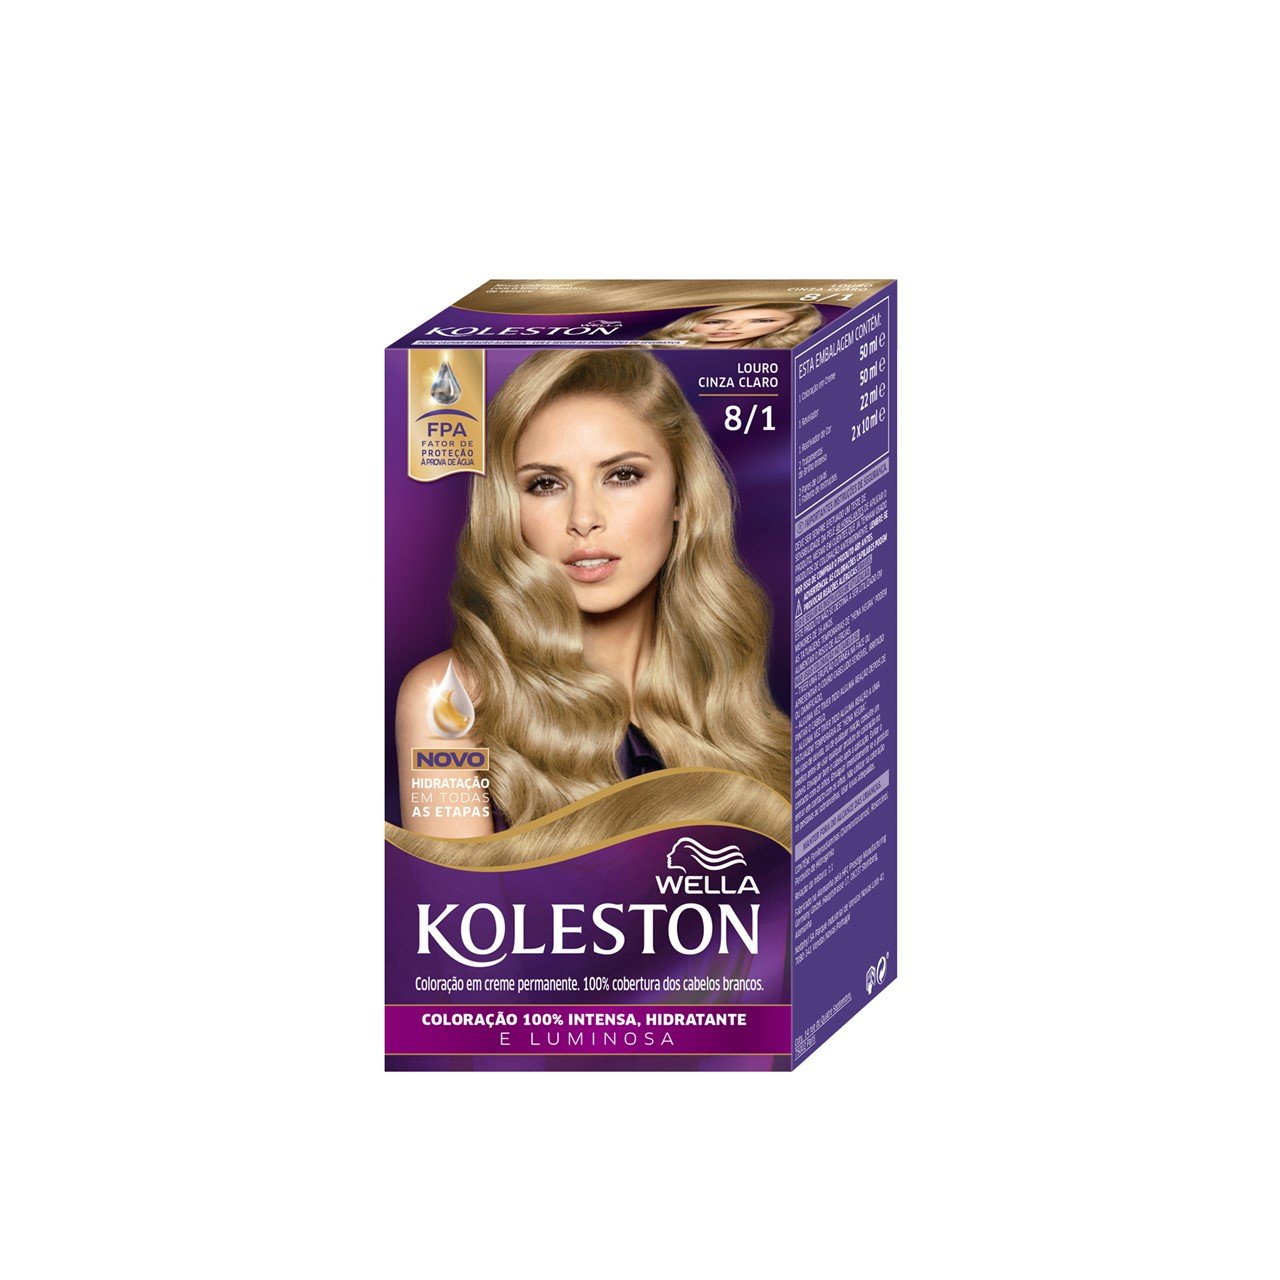 Wella Koleston 8/1 Light Ash Blonde Permanent Hair Color